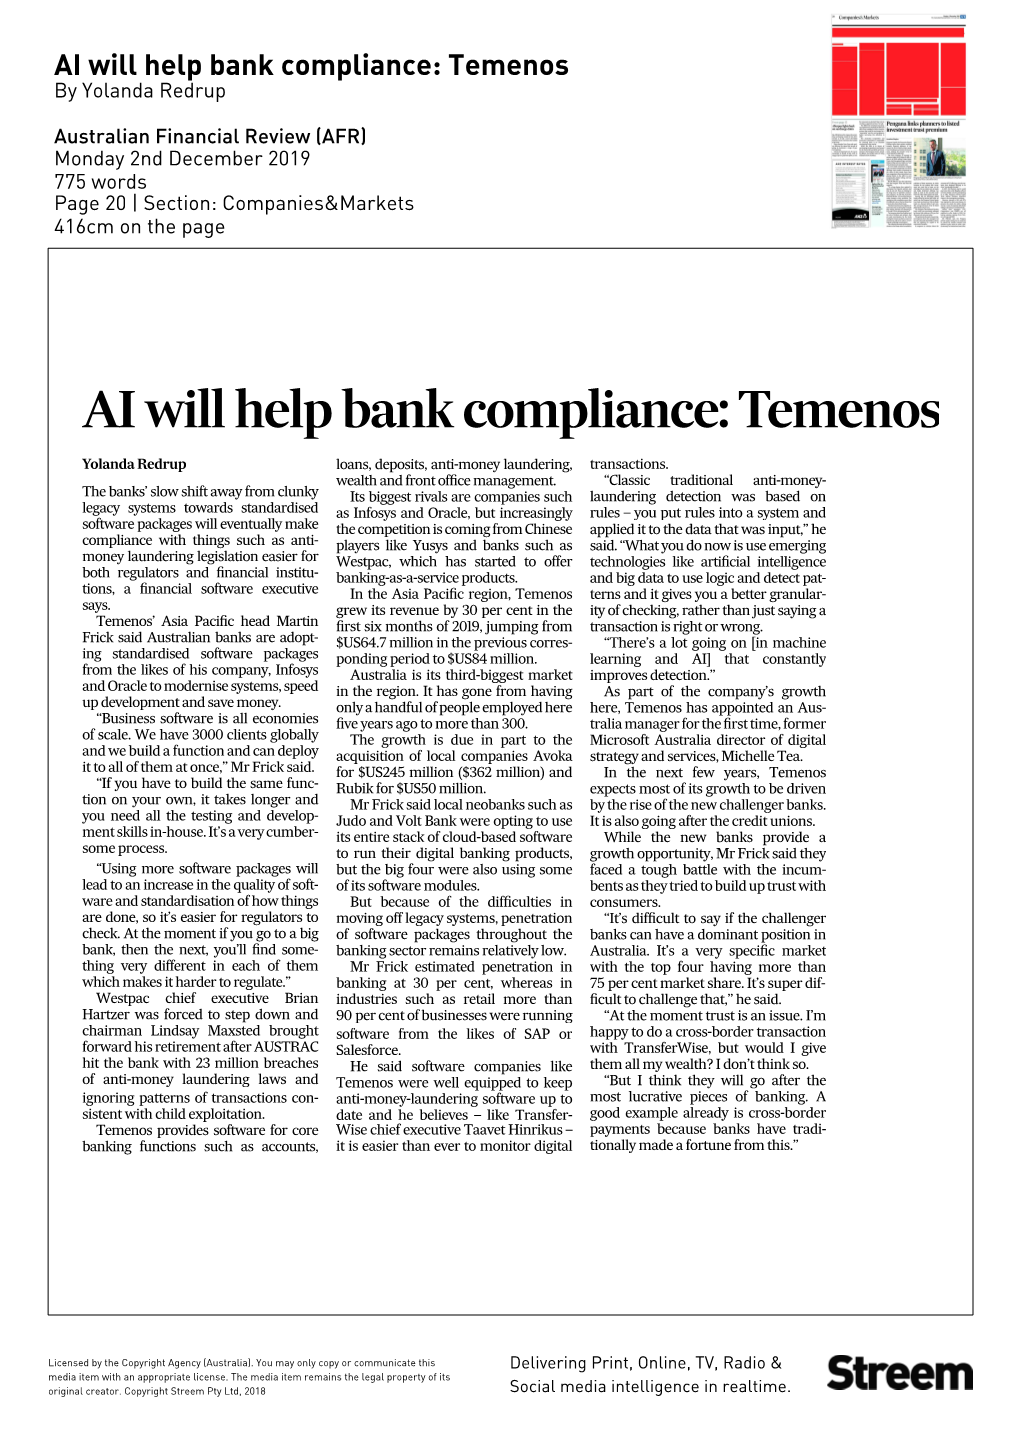 AI Will Help Bank Compliance: Temenos by Yolanda Redrup